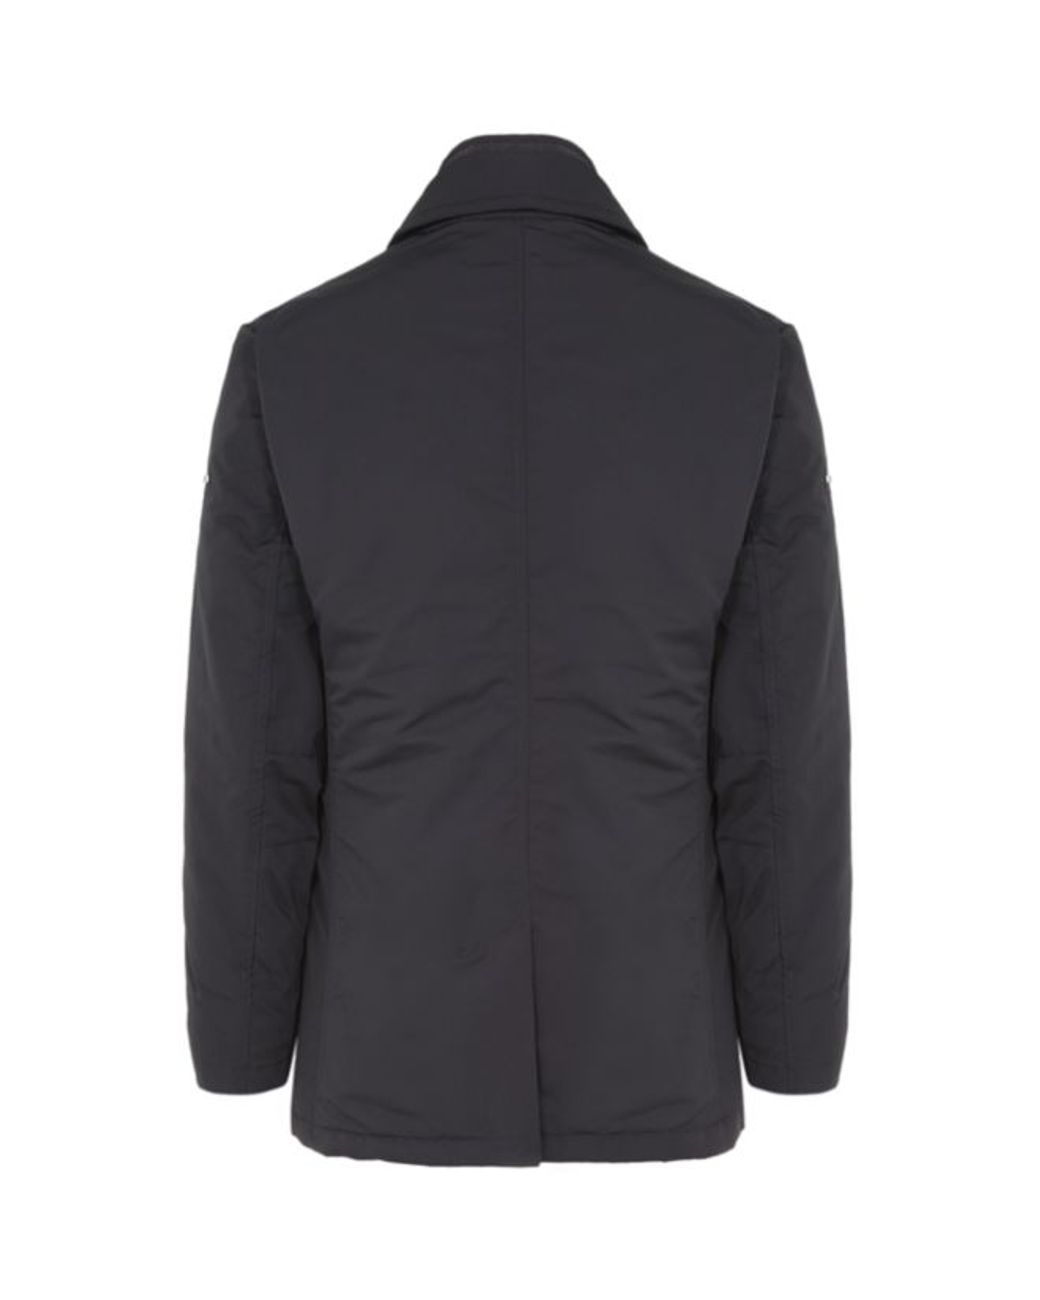 Mens Classic Blazer Black Leather Jacket | A1 Fashion Goods